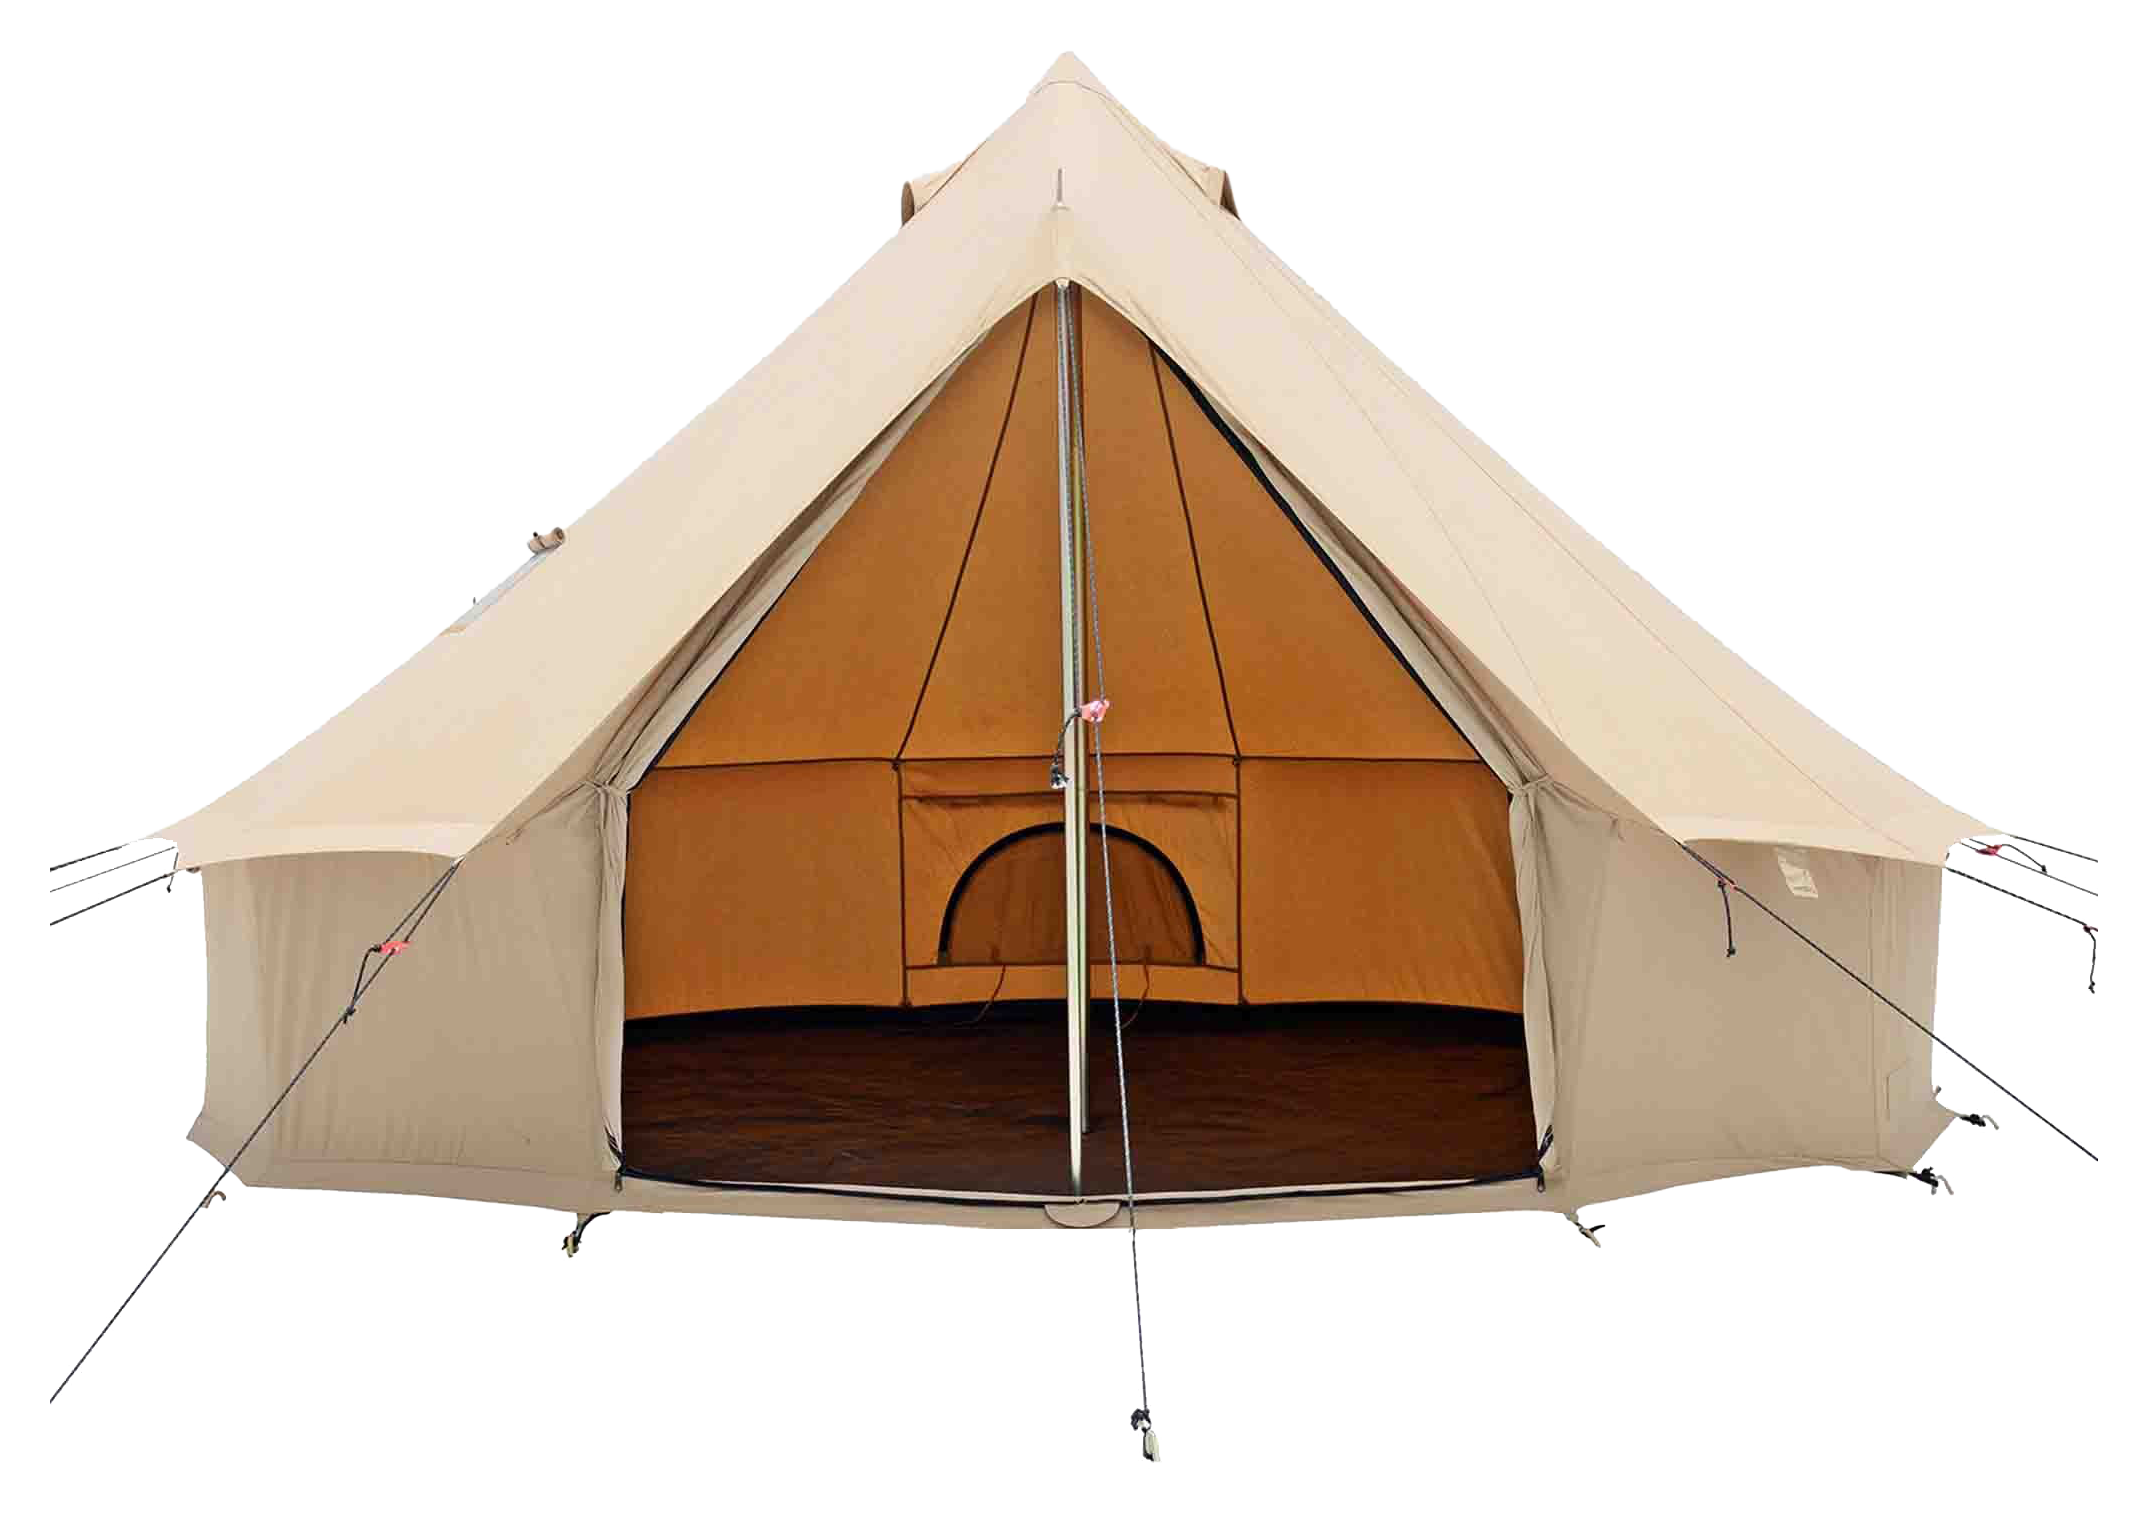 White Duck Outdoors Regatta 16.5' Fire-Water-Resistant Bell Tent - Sandstone Beige